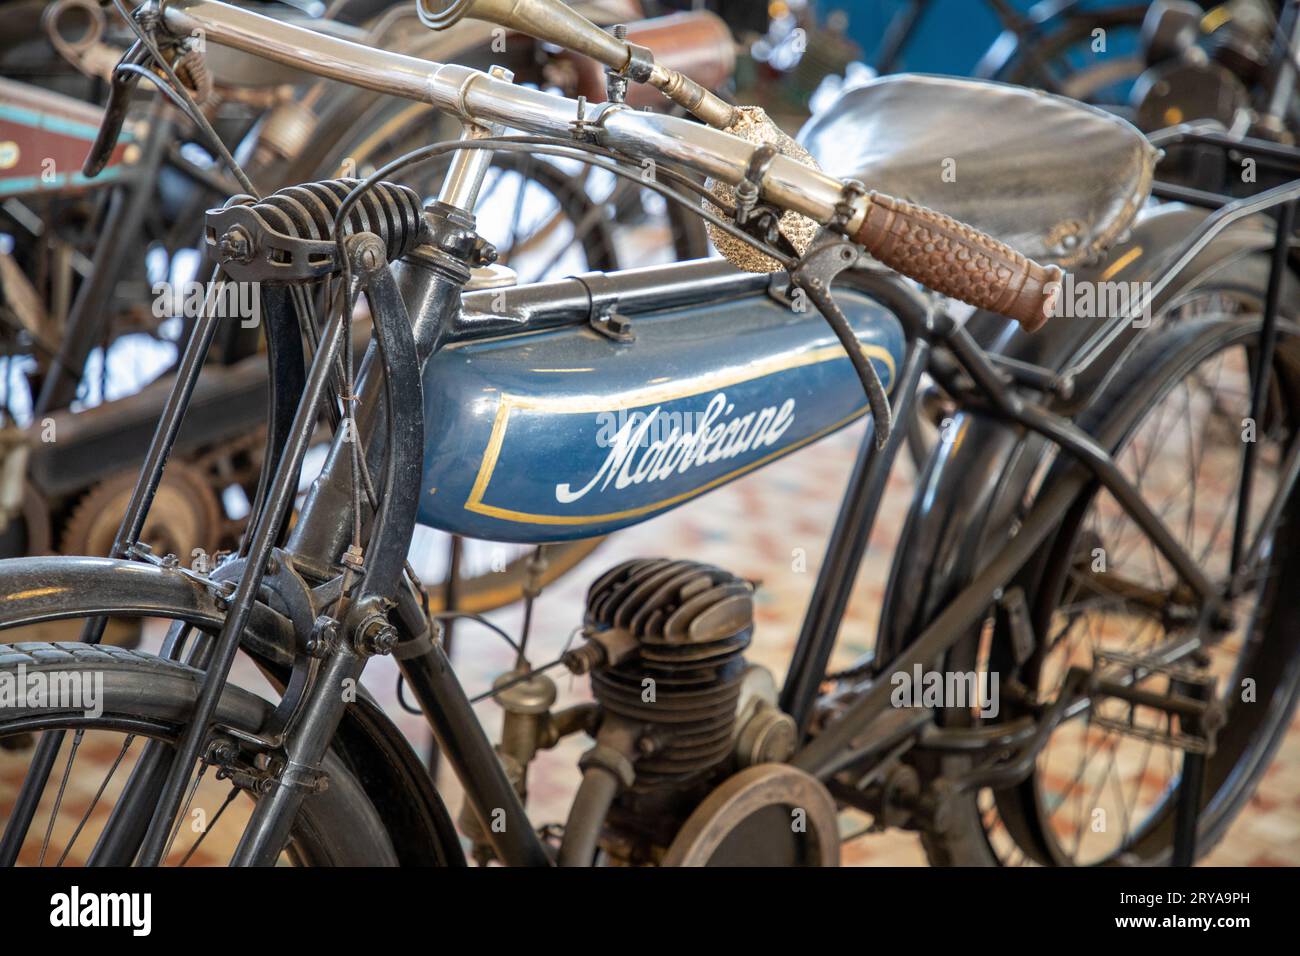 French classic motor bike -Fotos und -Bildmaterial in hoher Auflösung –  Alamy